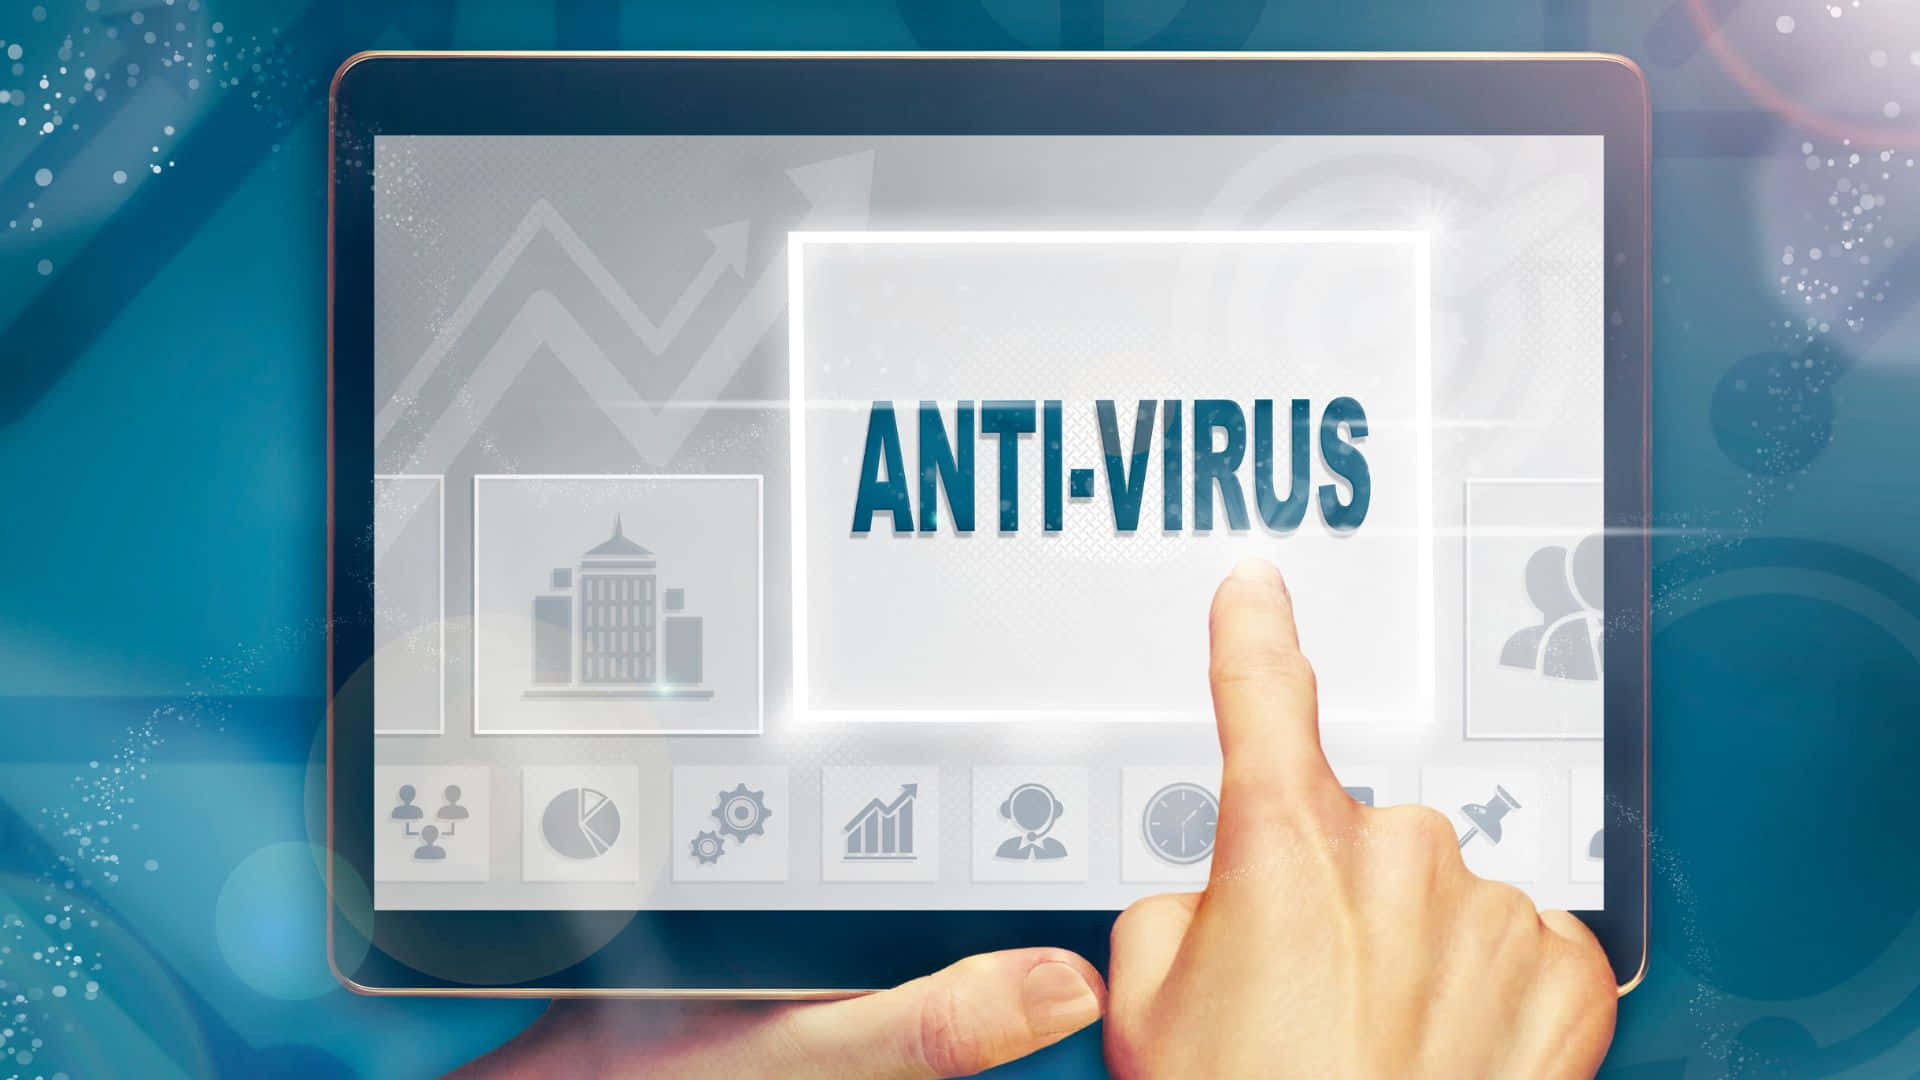 Antivirus 1920 X 1080 Wallpaper